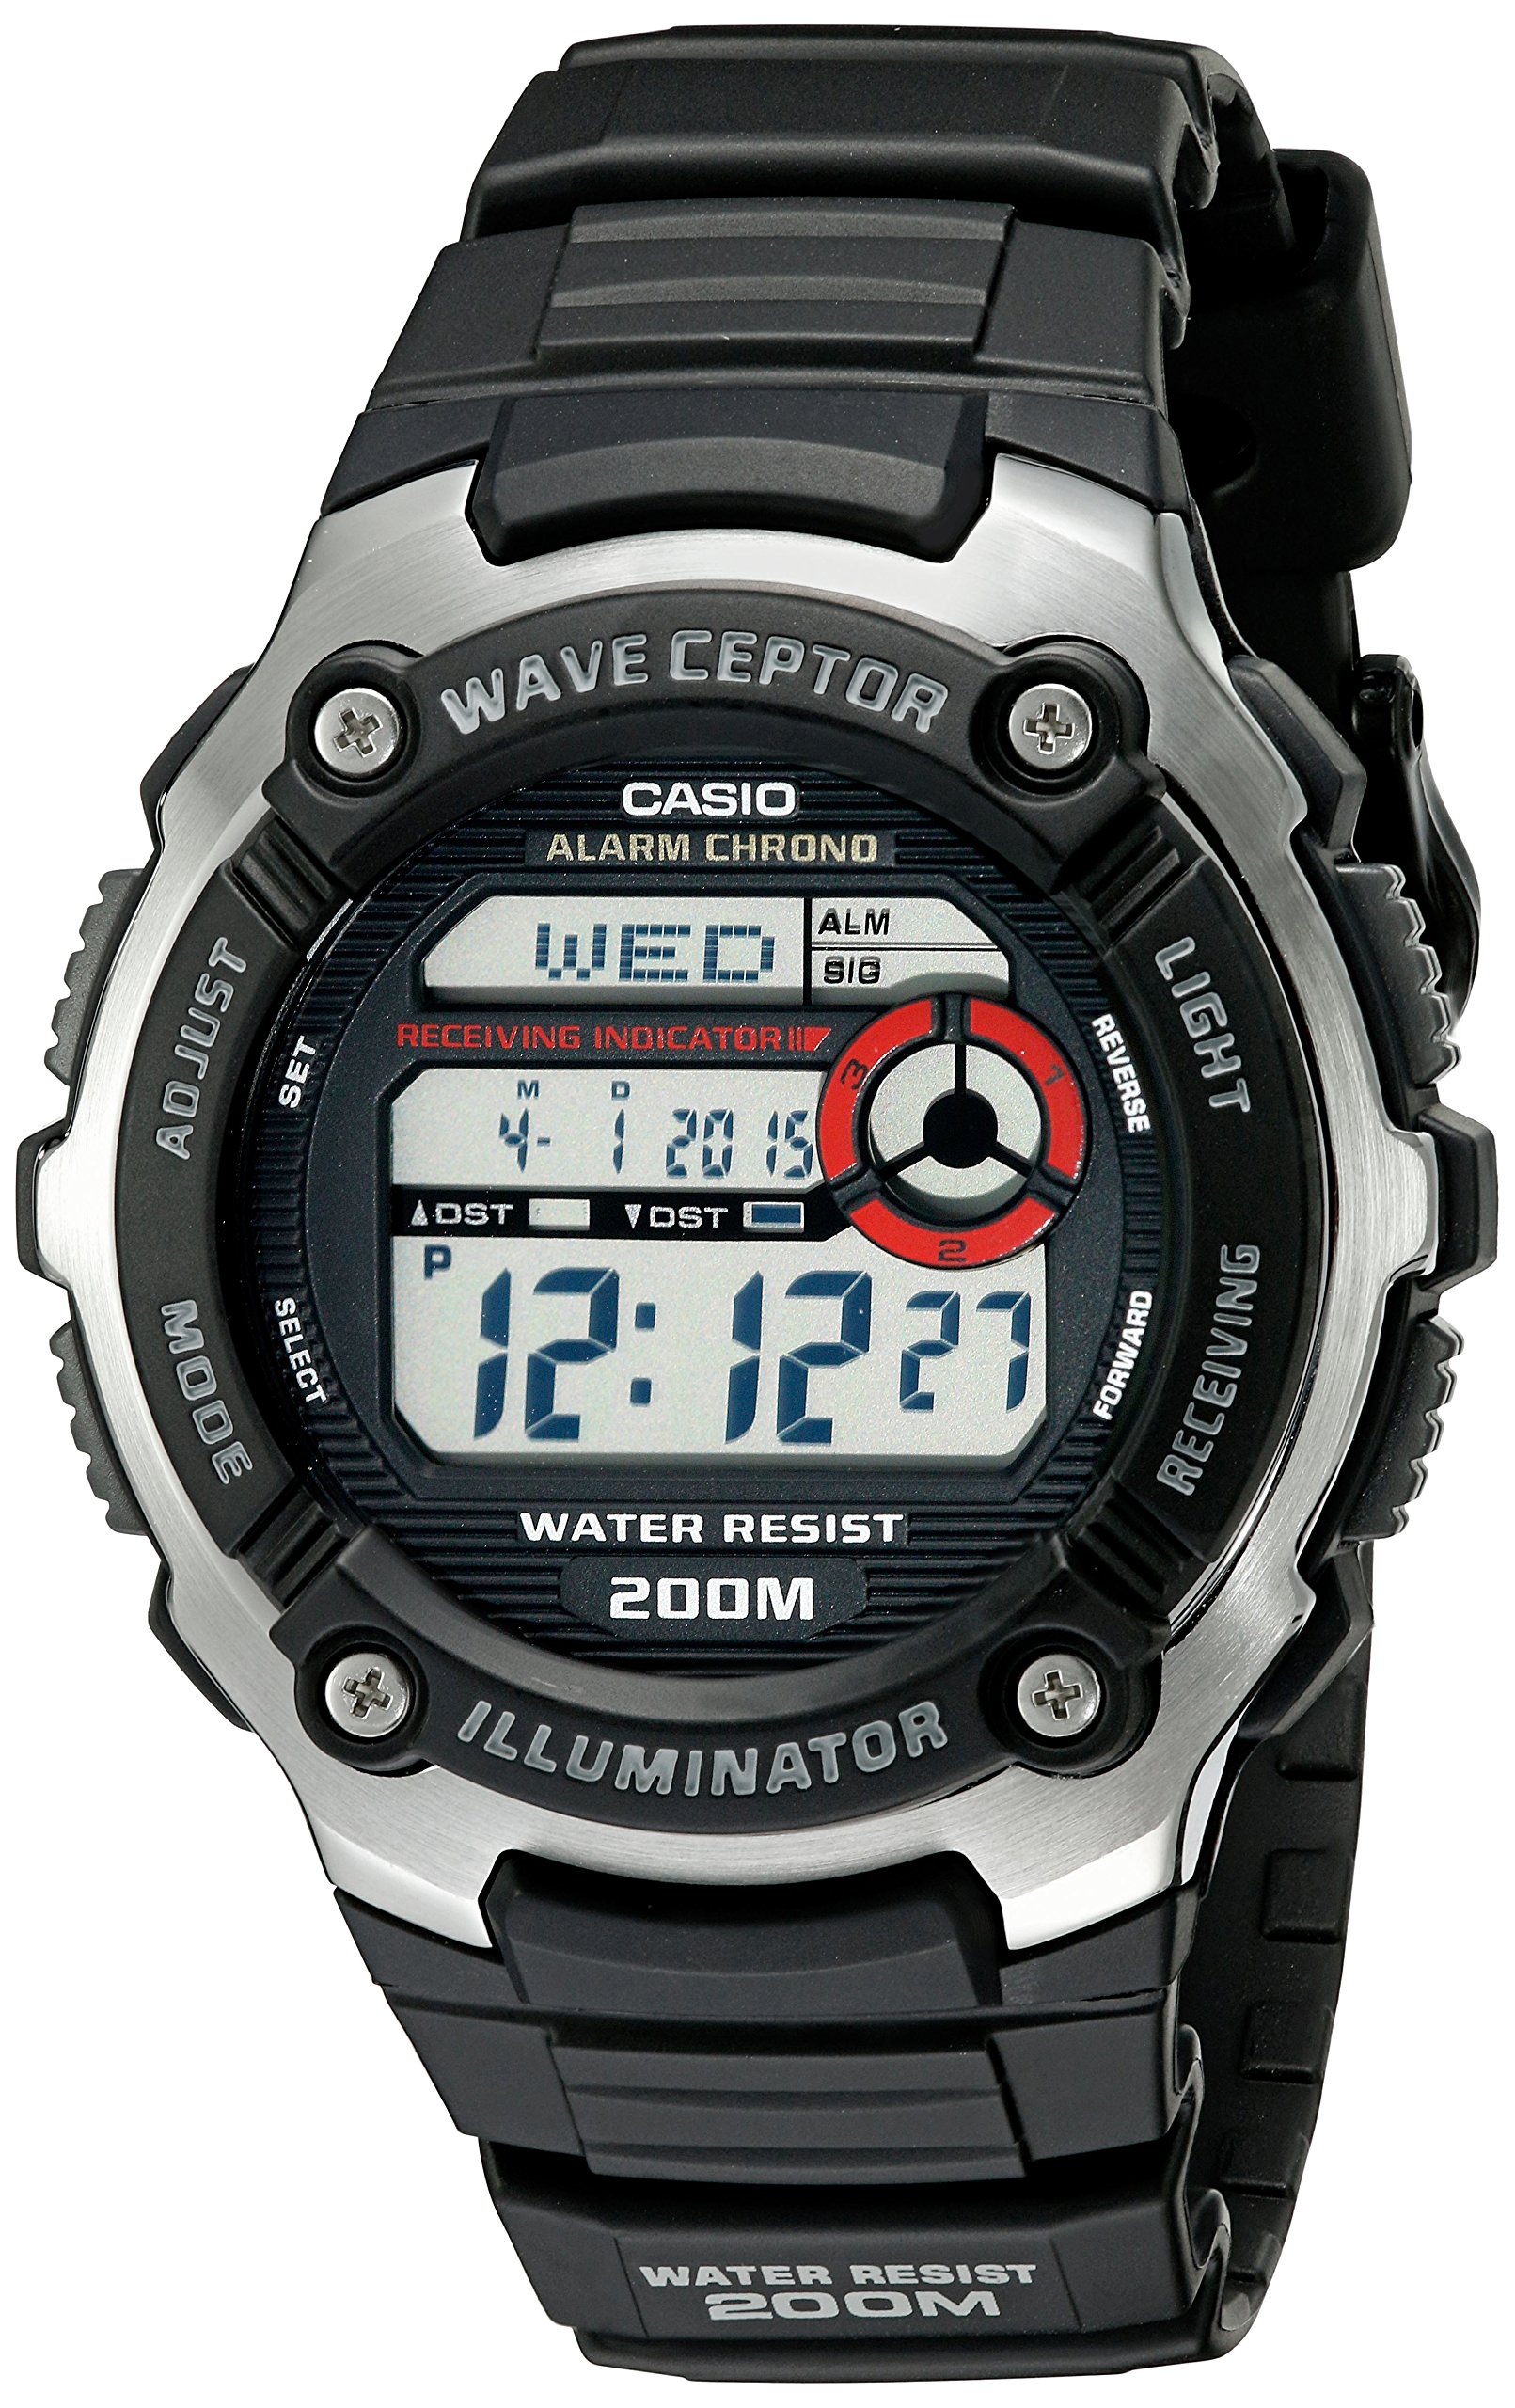 Casio EAW-WV-200A-1AV Men's WV200A-1AV Waveceptor Watch with Black Band